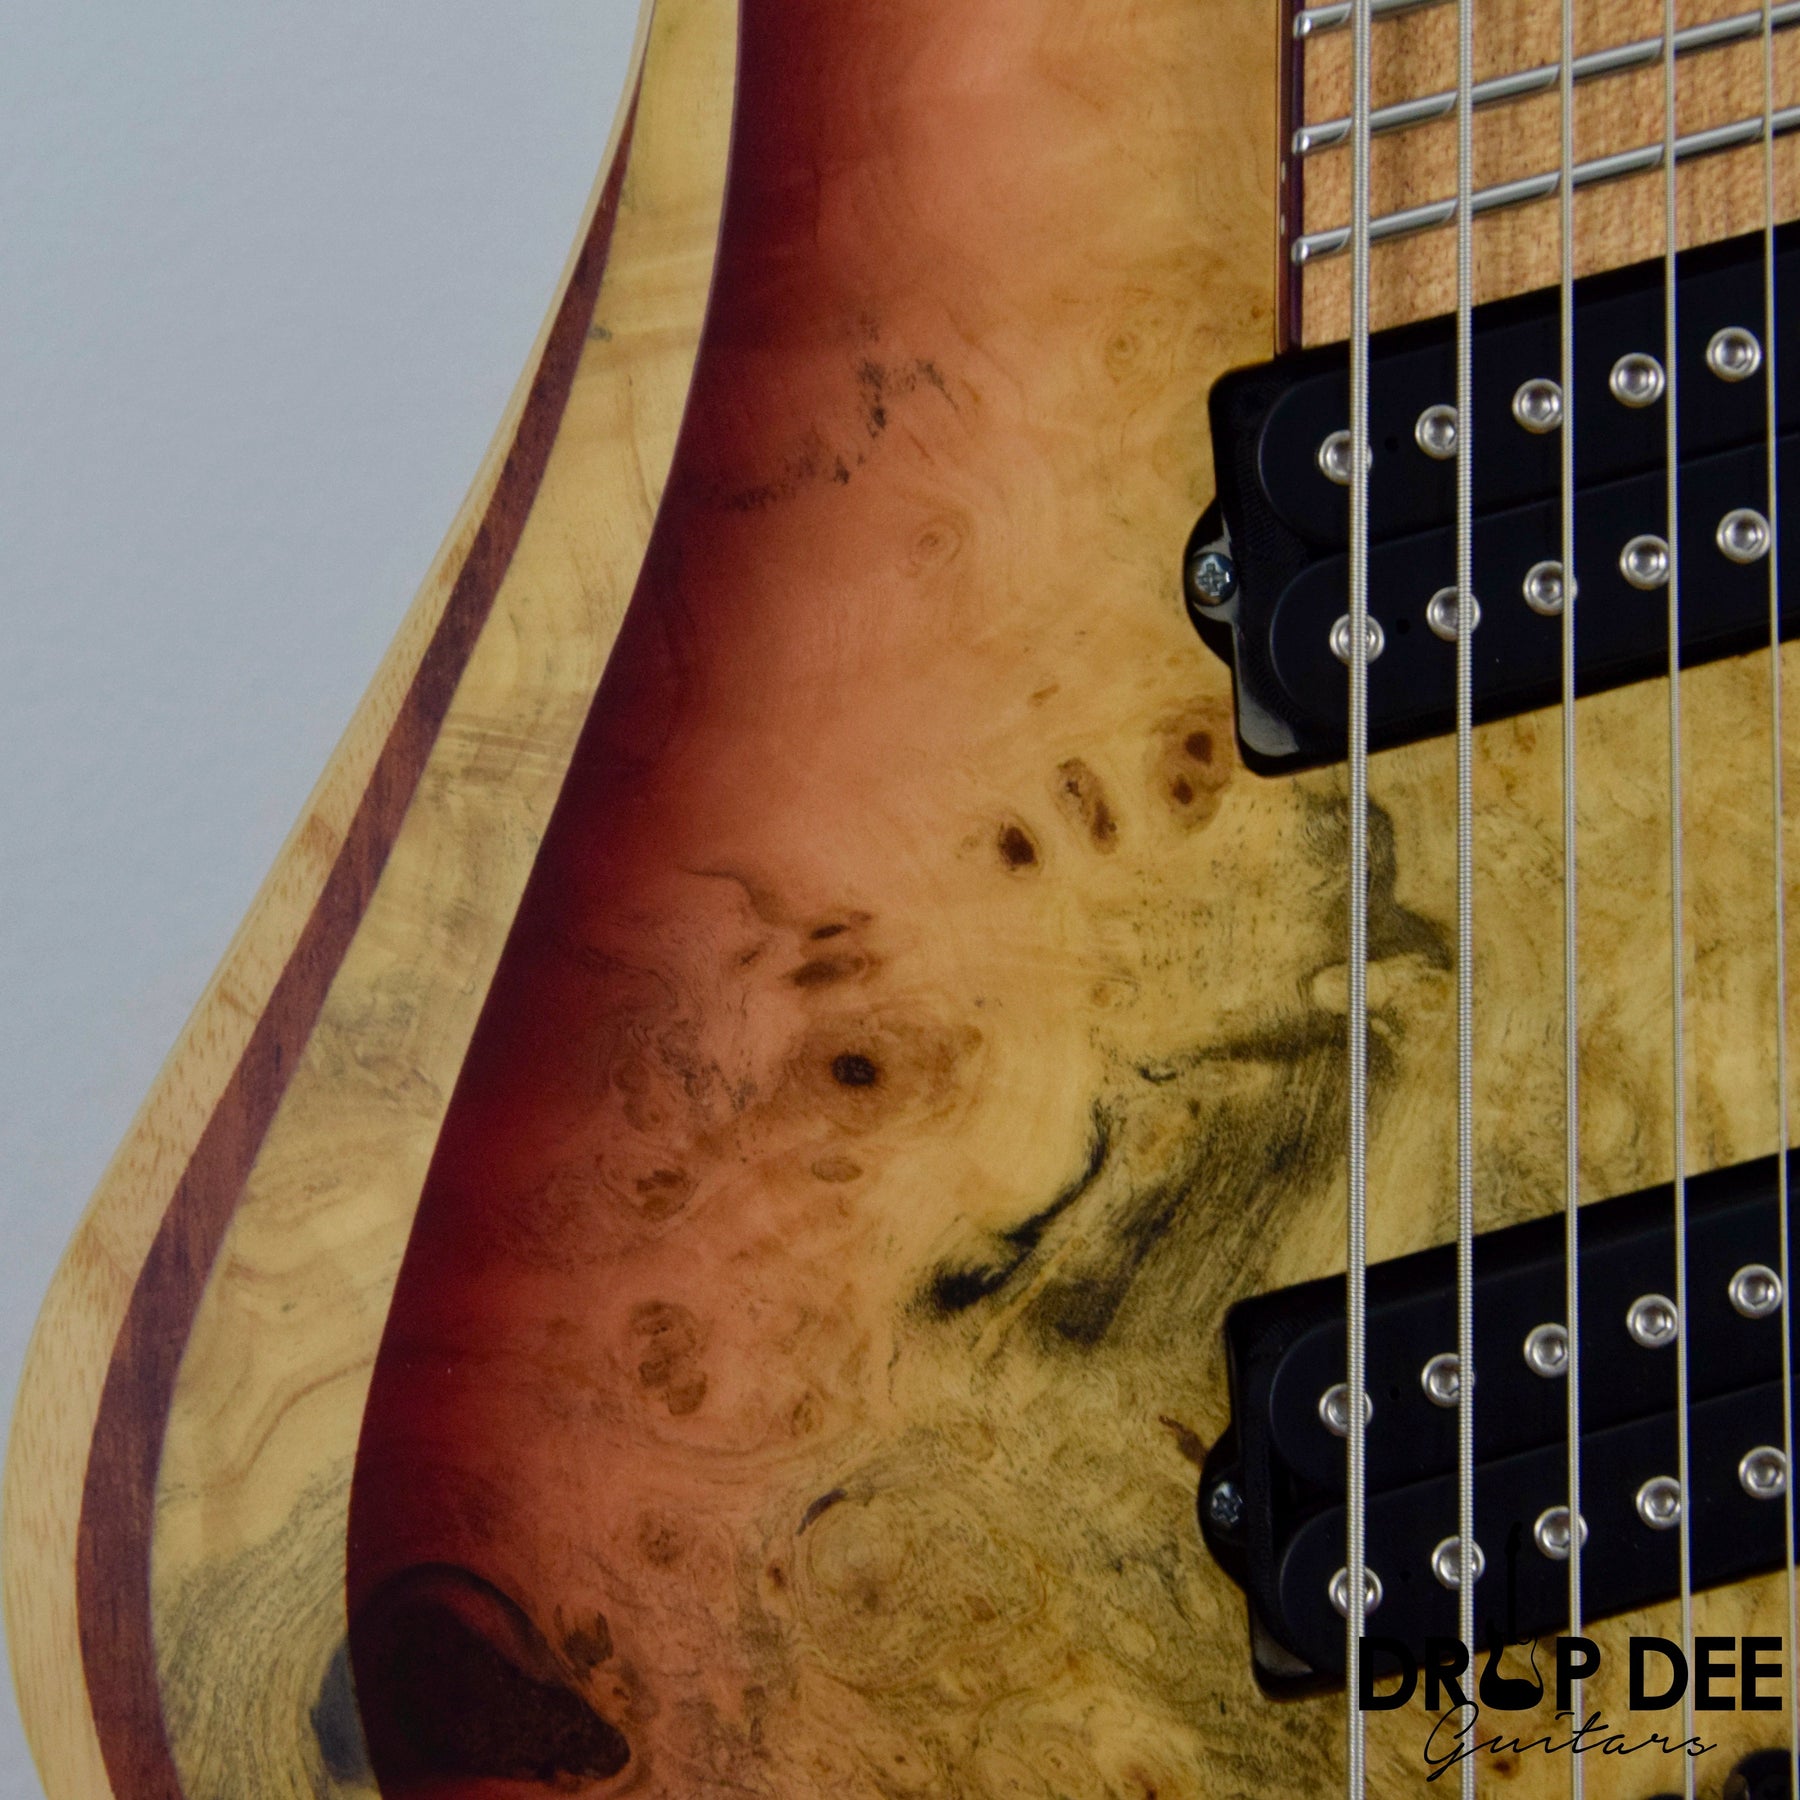 Skervesen Swan 8FF Multi-Scale 8-String Electric Guitar w/ Case